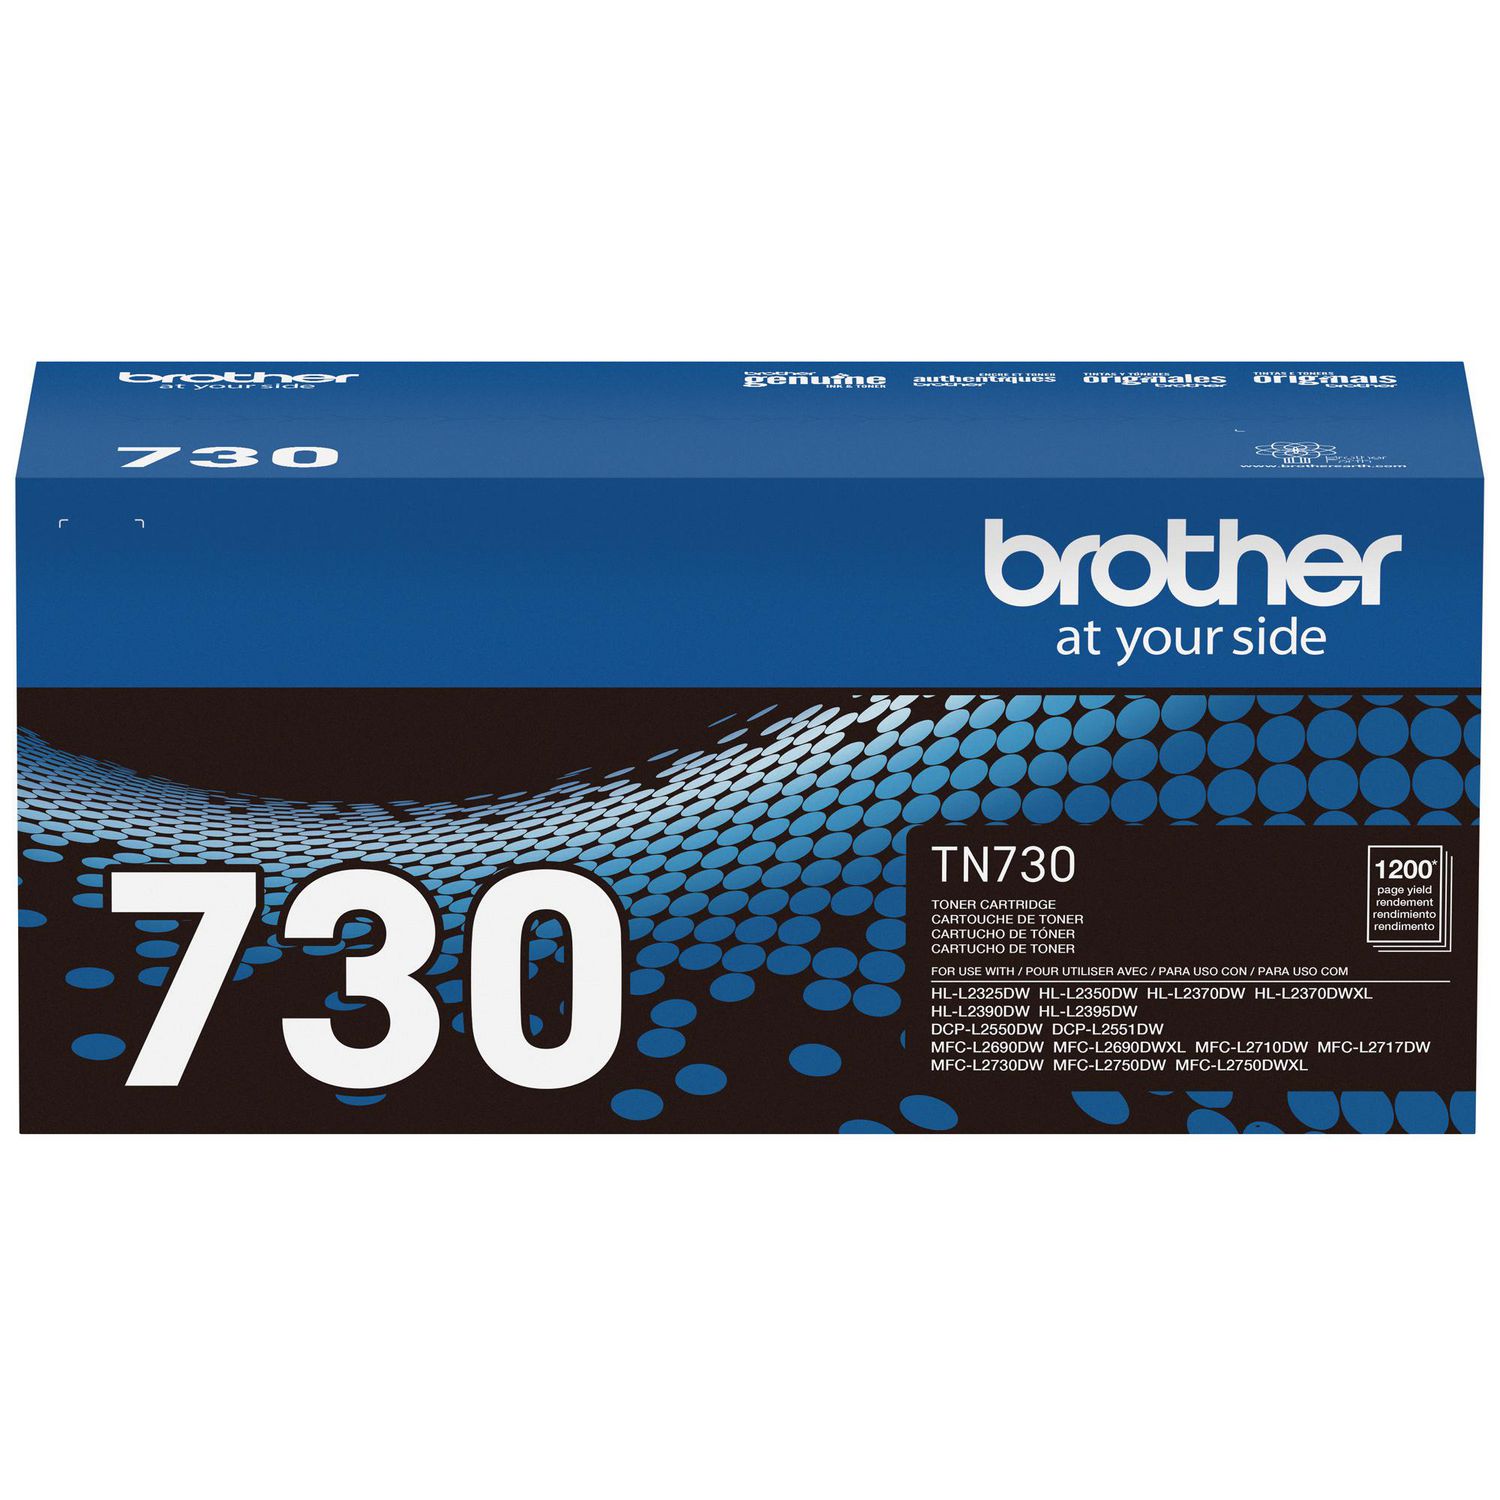 Brother Genuine TN730 Toner Cartridge - Black, Black toner 1,200